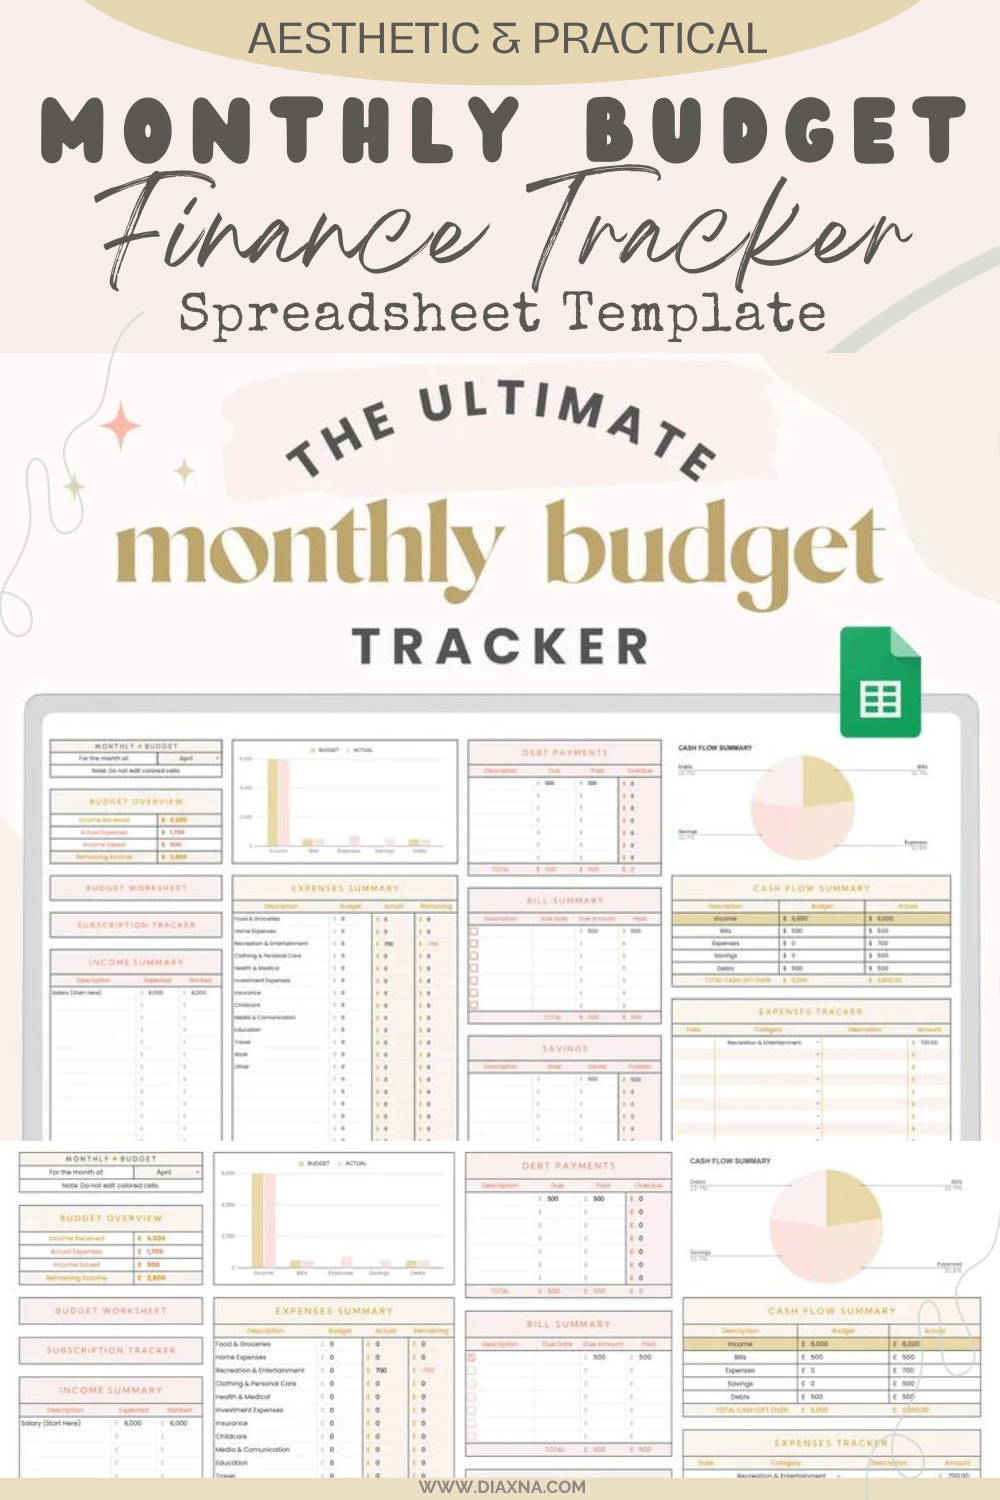 Monthly Budget Planner: Monthly Budget Planner: Finance Monthly, Weekly,  Daily Budget Planner Expense Tracker Bill Organizer / Tracker Workboo  (Paperback)